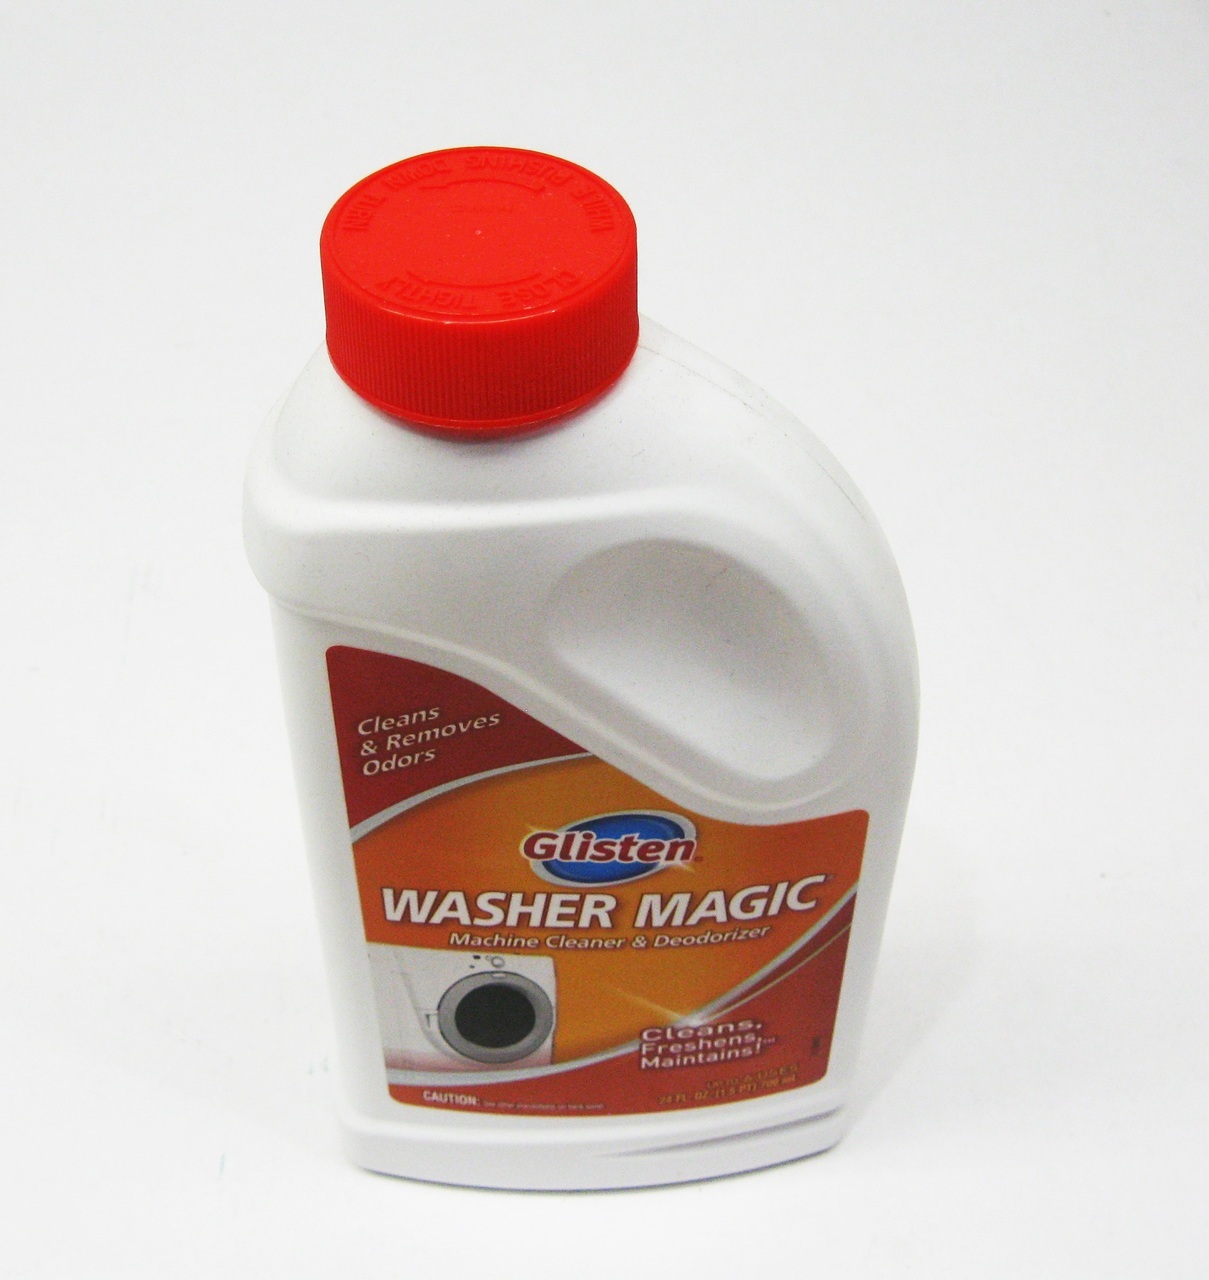 Glisten Washer Magic Washing Machine Cleaner and Deodorizer, 8